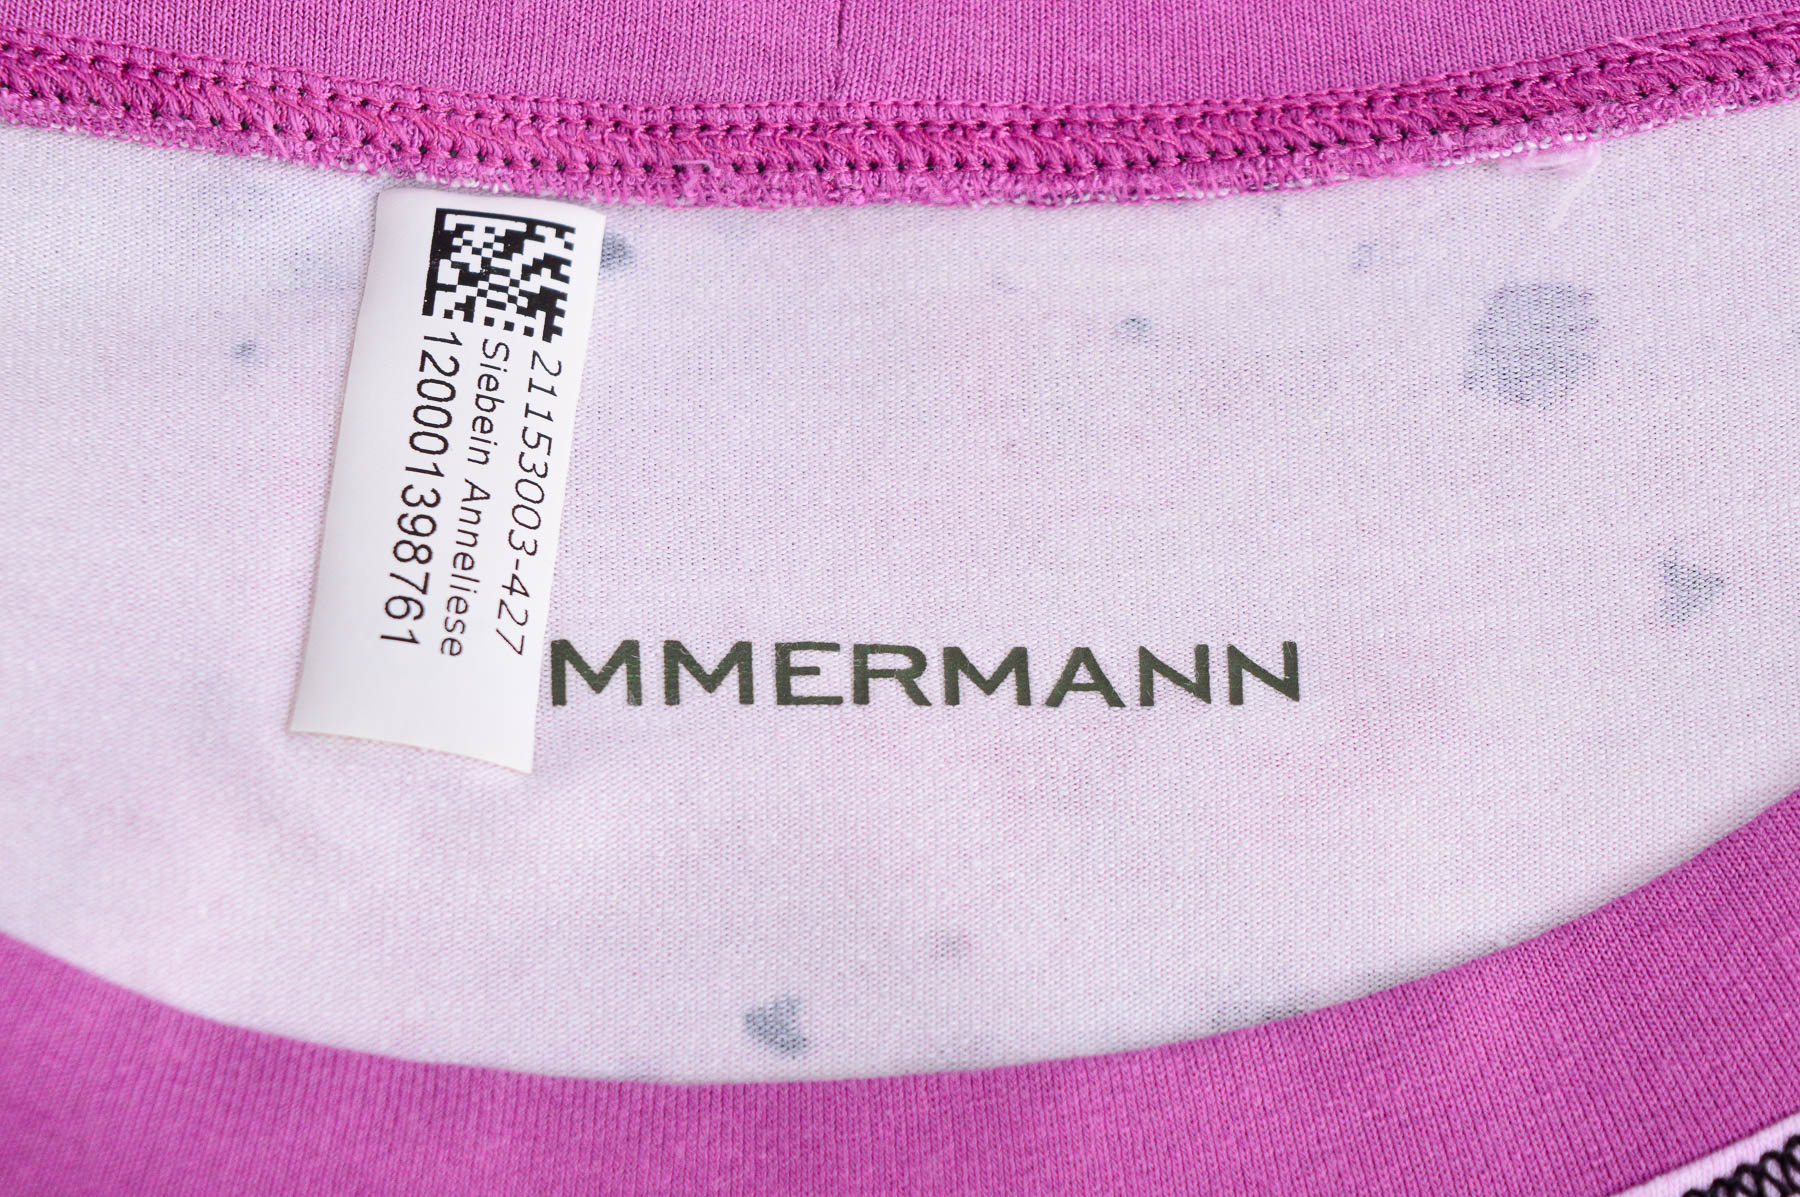 Дамска тениска - Sommermann - 2